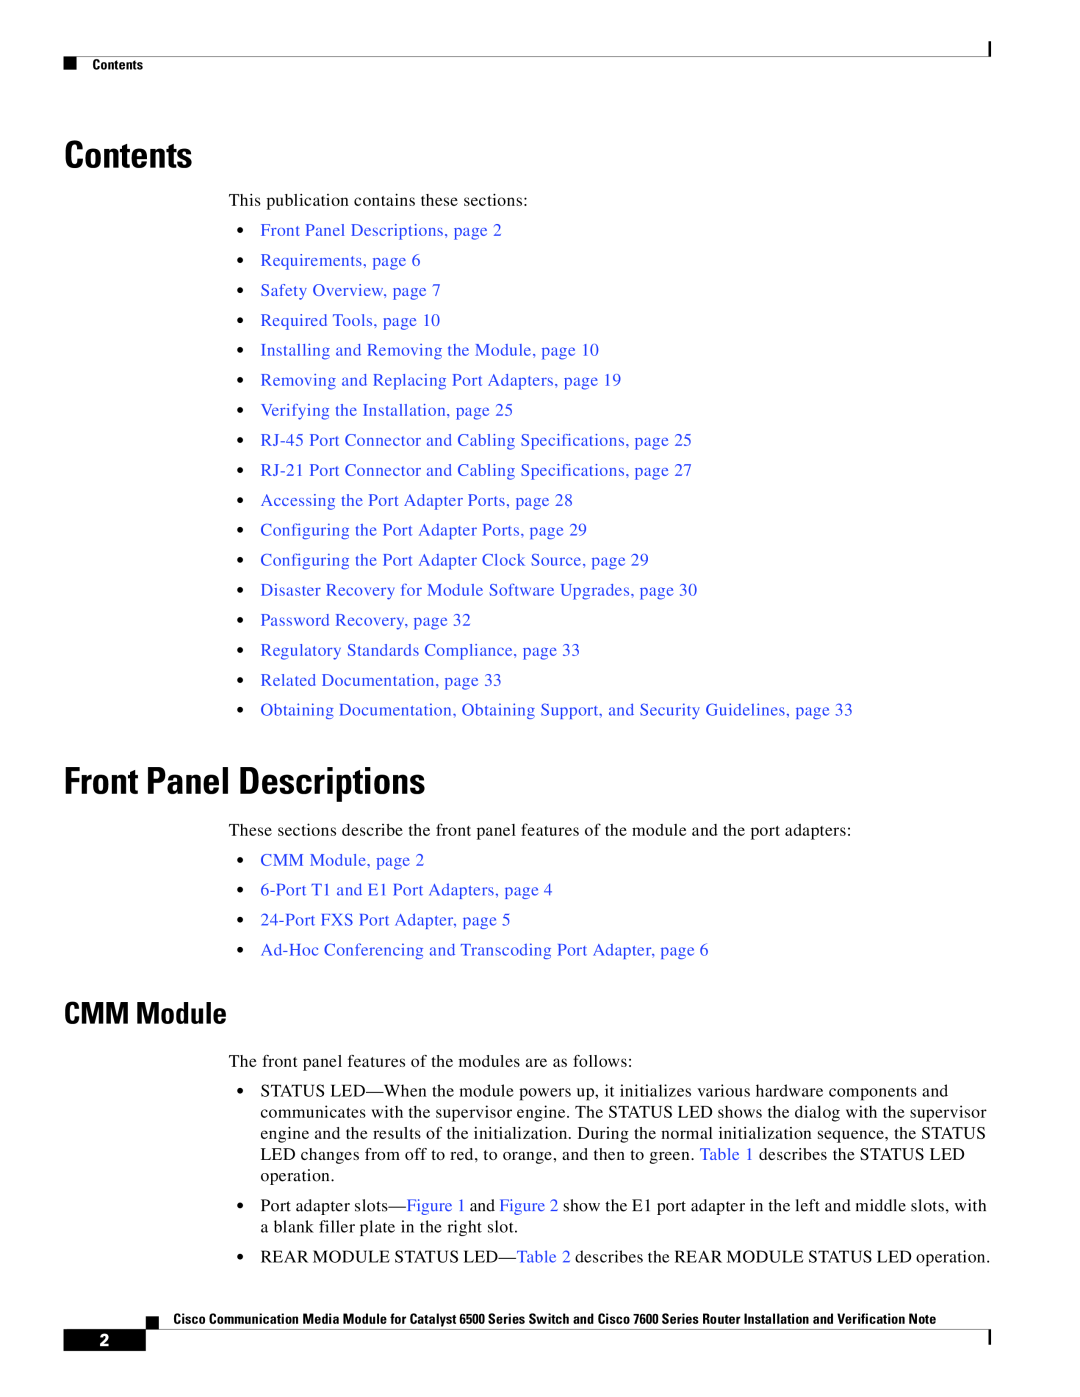 Cisco Systems WS-C6513-E-RF, 6500-E manual Contents, Front Panel Descriptions, CMM Module 